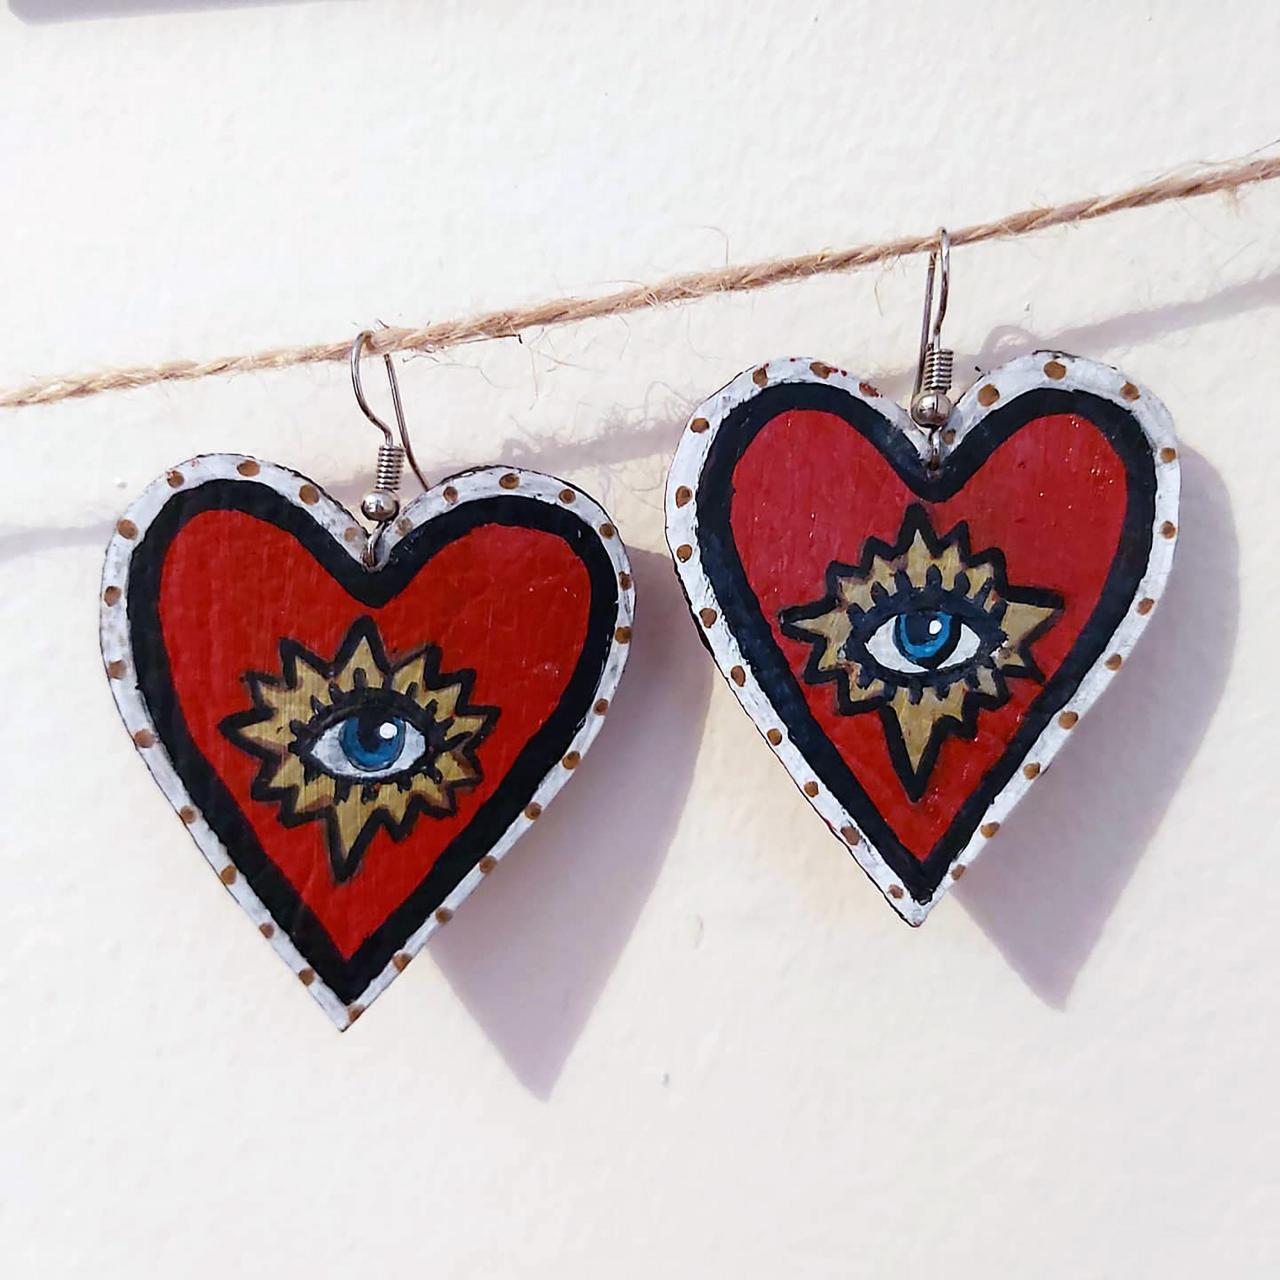 Heart with eye , dangle earrings . Acrylic painted faux leather